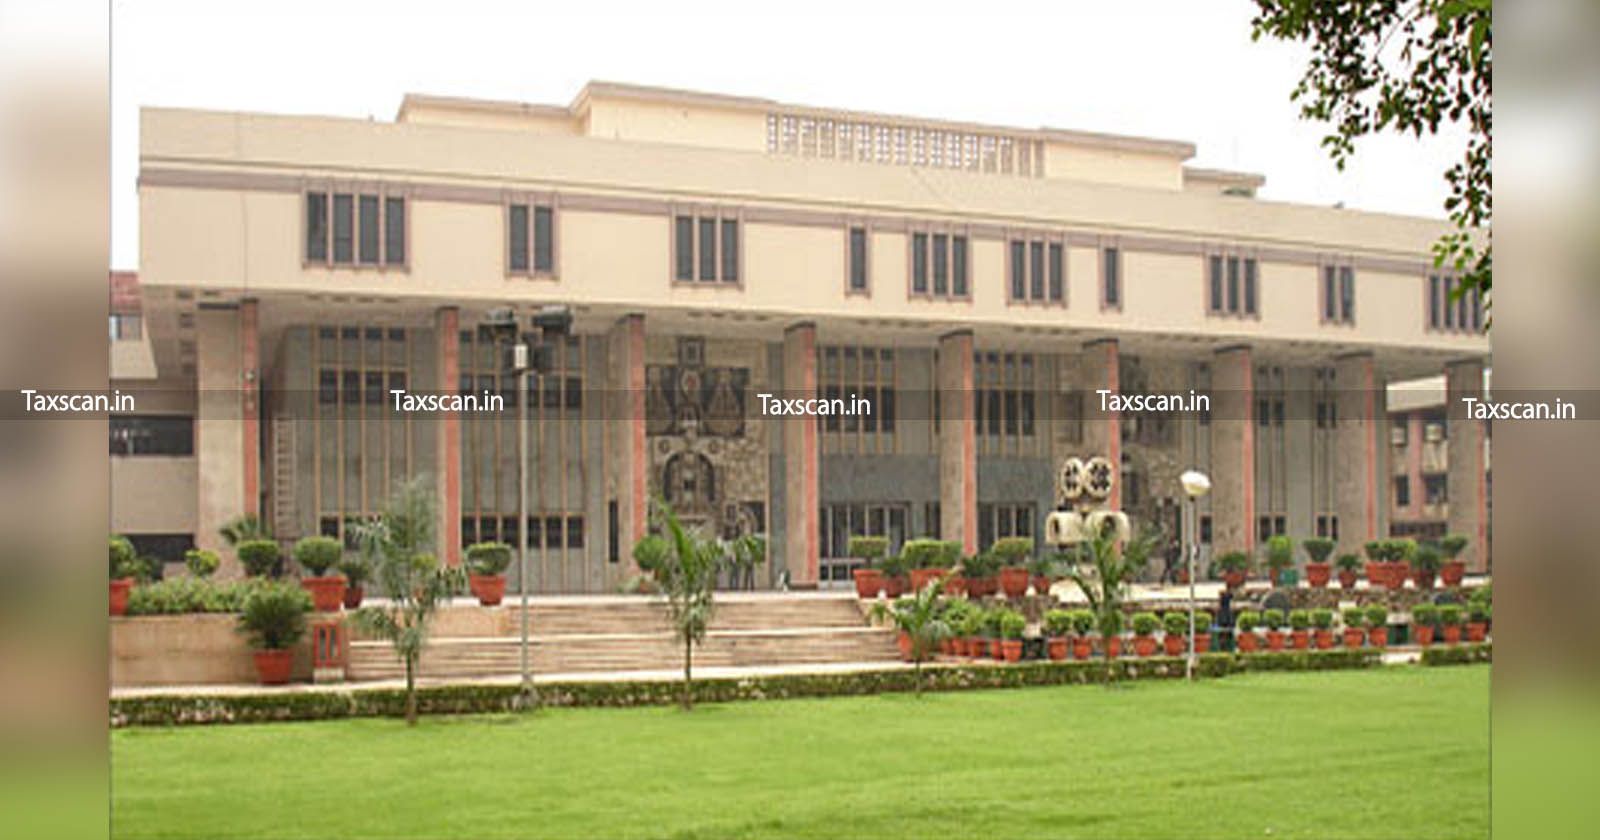 assessment order passed is not Legal - Delhi High Court - assessment order - taxscan